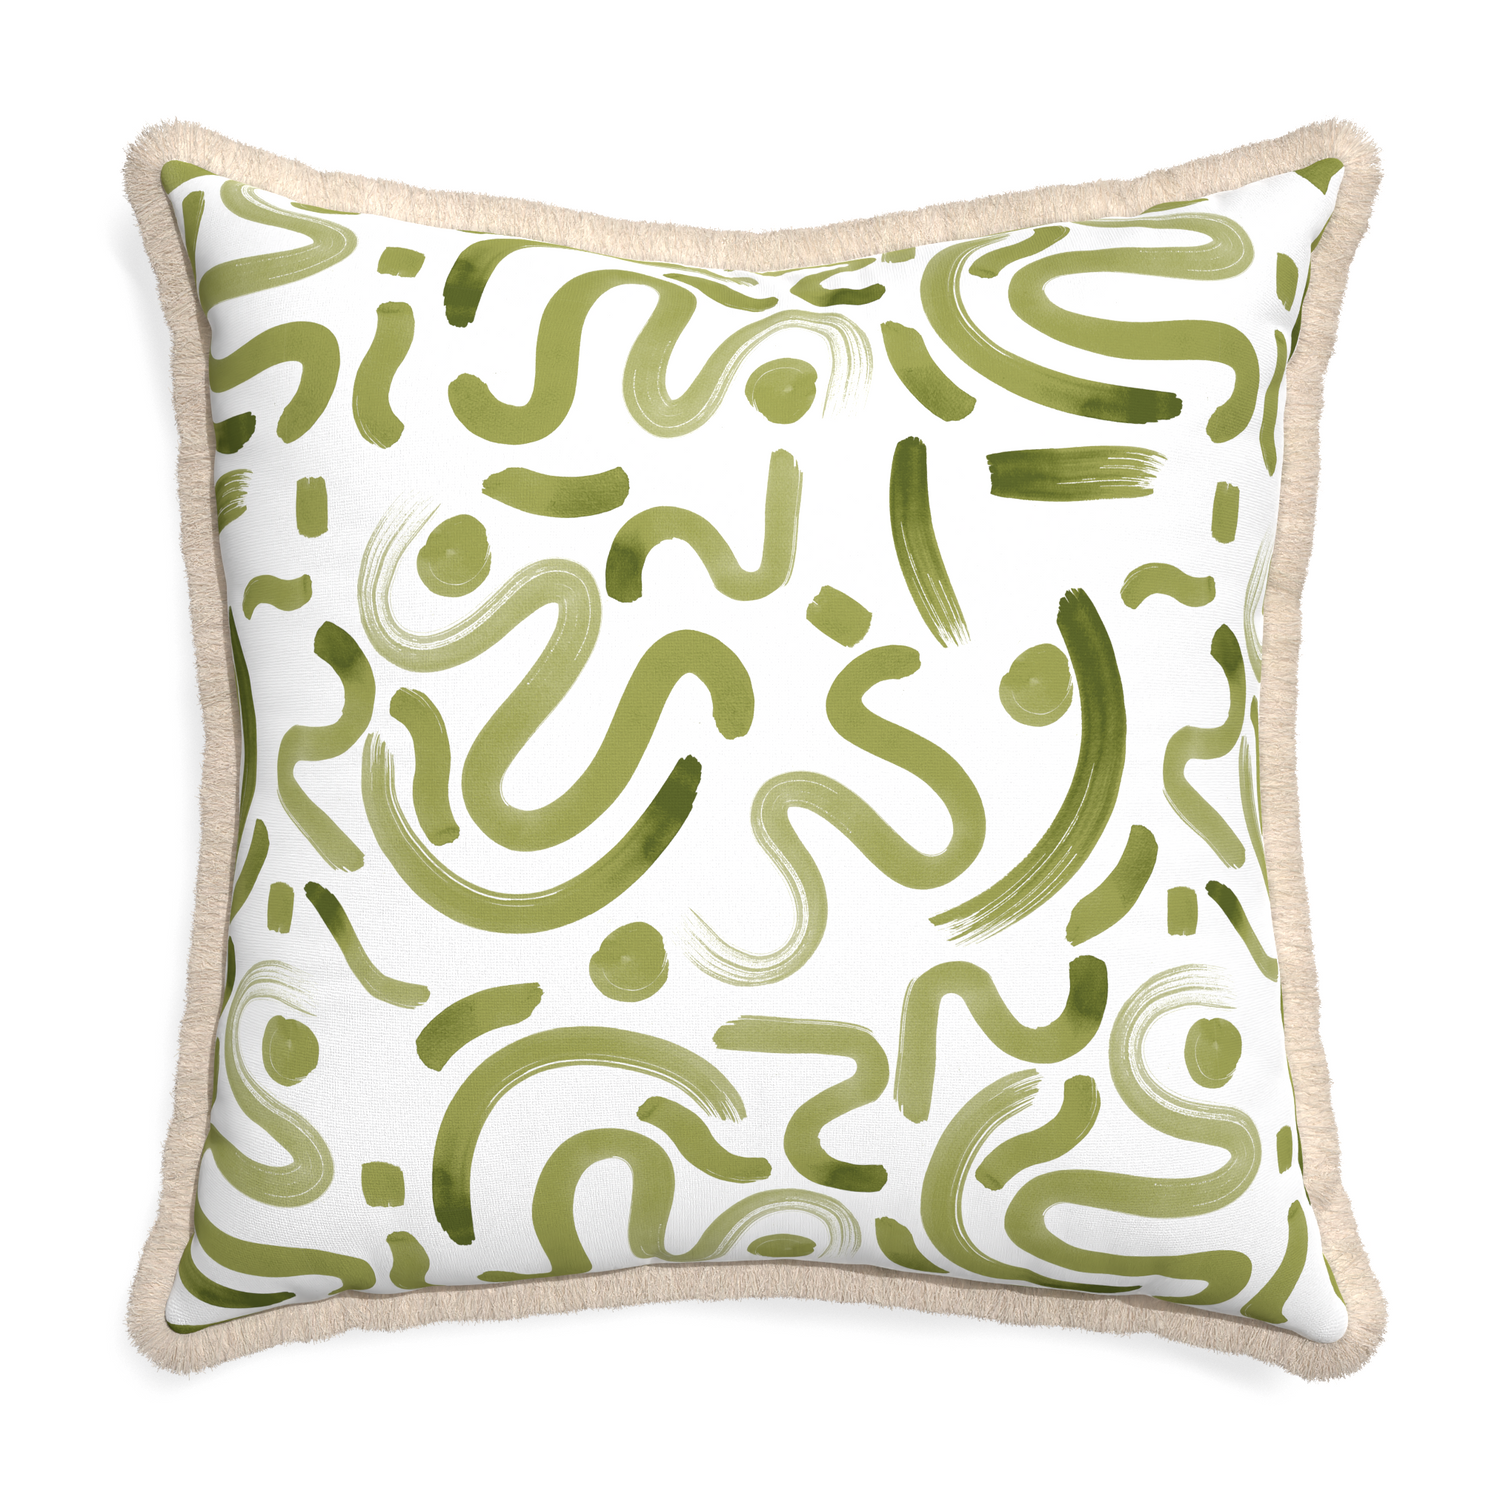 Euro-sham hockney moss custom pillow with cream fringe on white background